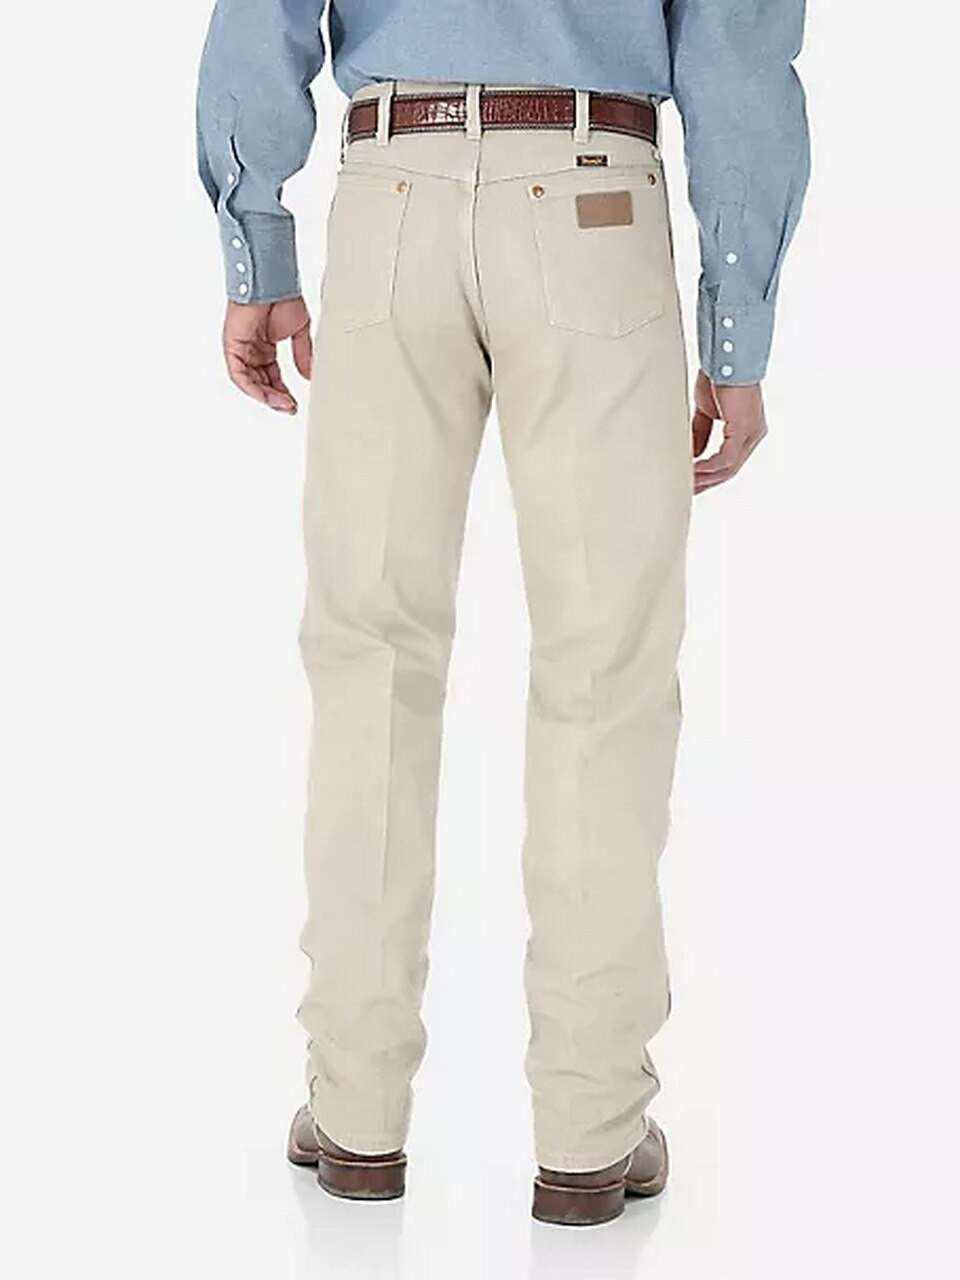 Wrangler Cowboy CutÂ® Men's Original Fit Tan Jeans